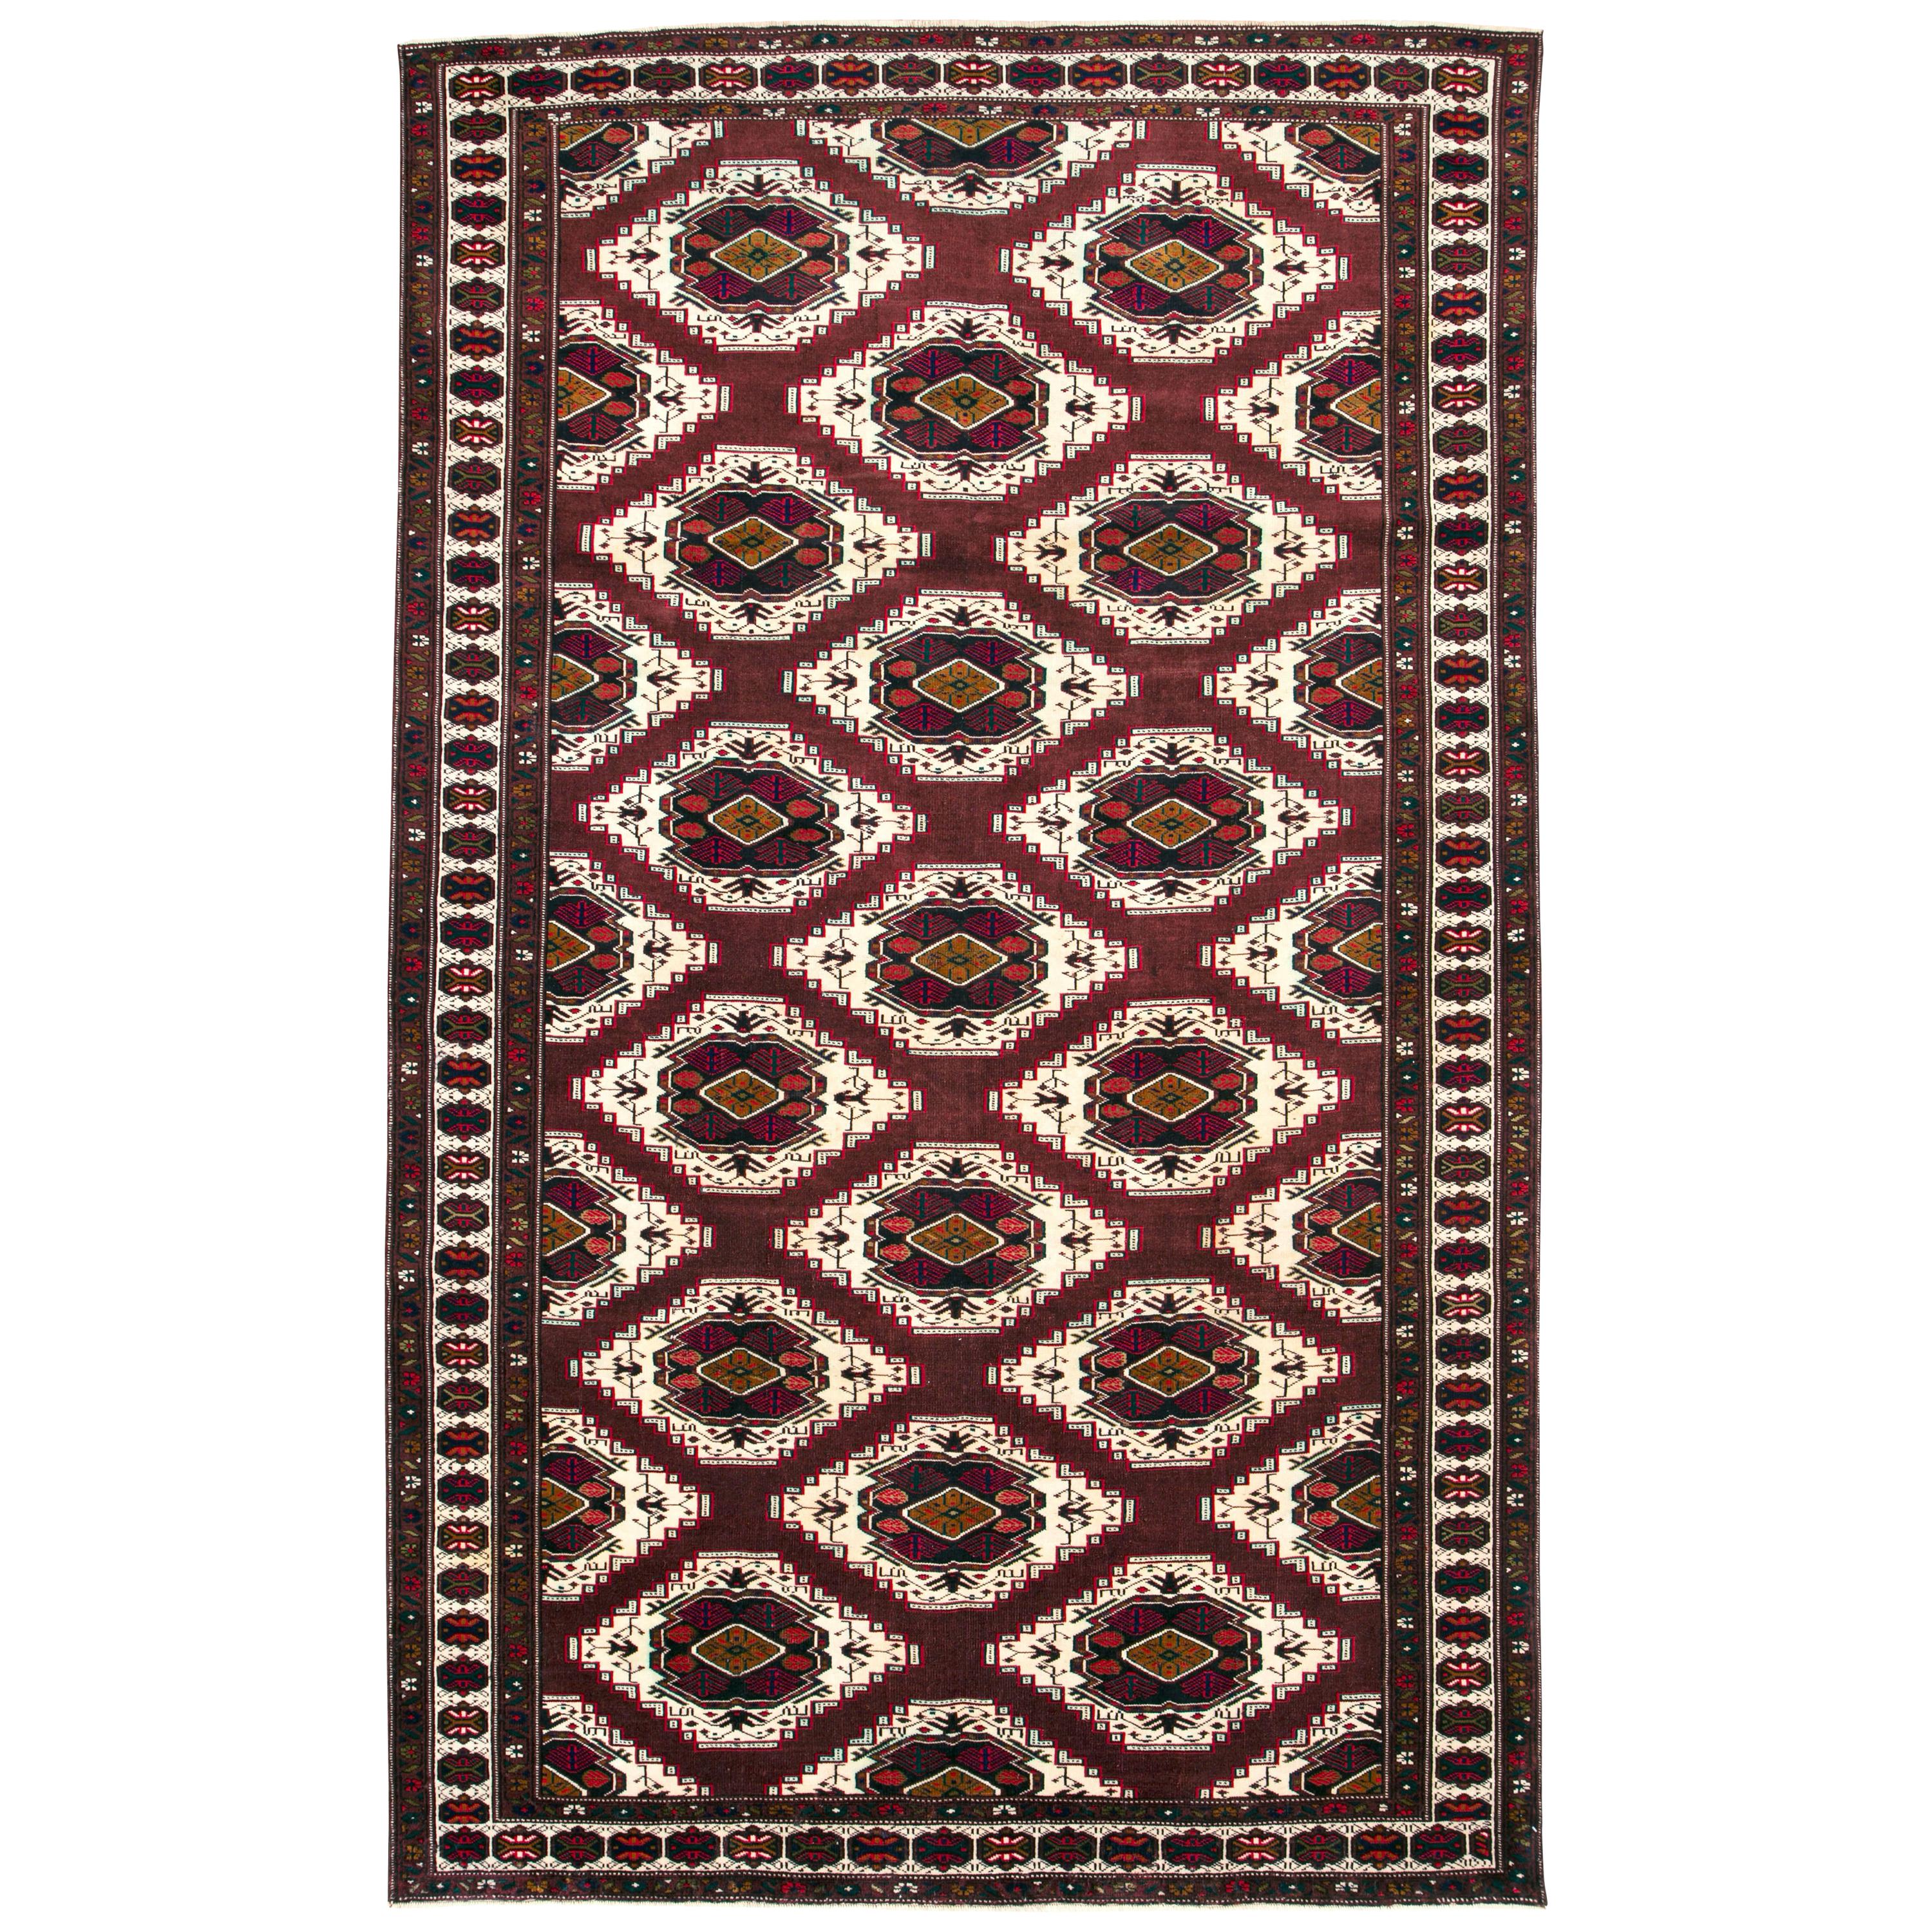 Vintage Central Asian Turkoman Carpet